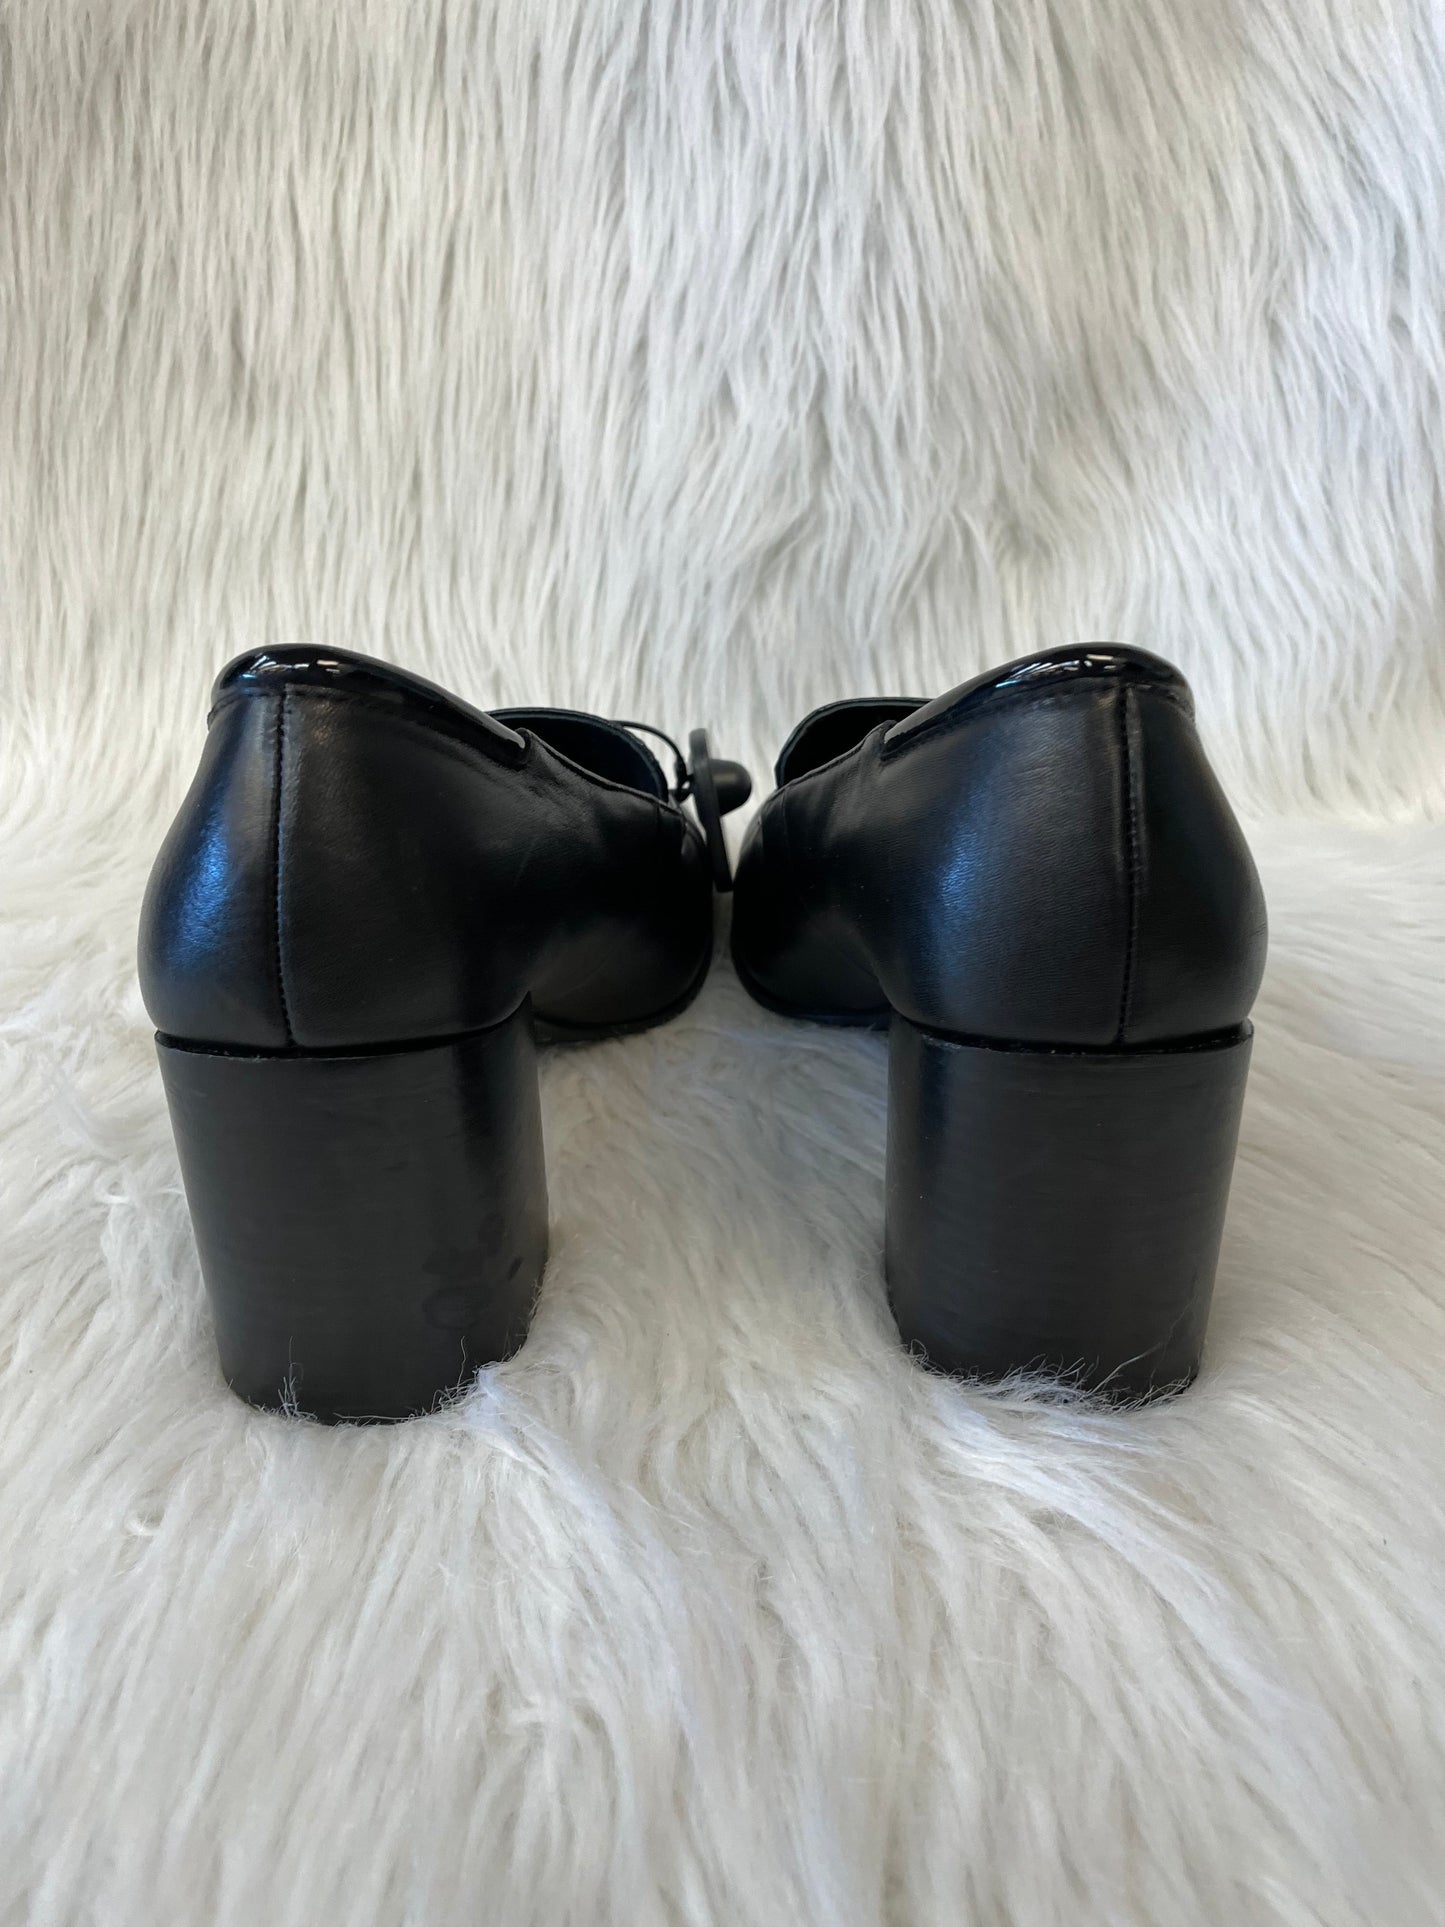 Black Shoes Heels Block Antonio Melani, Size 10